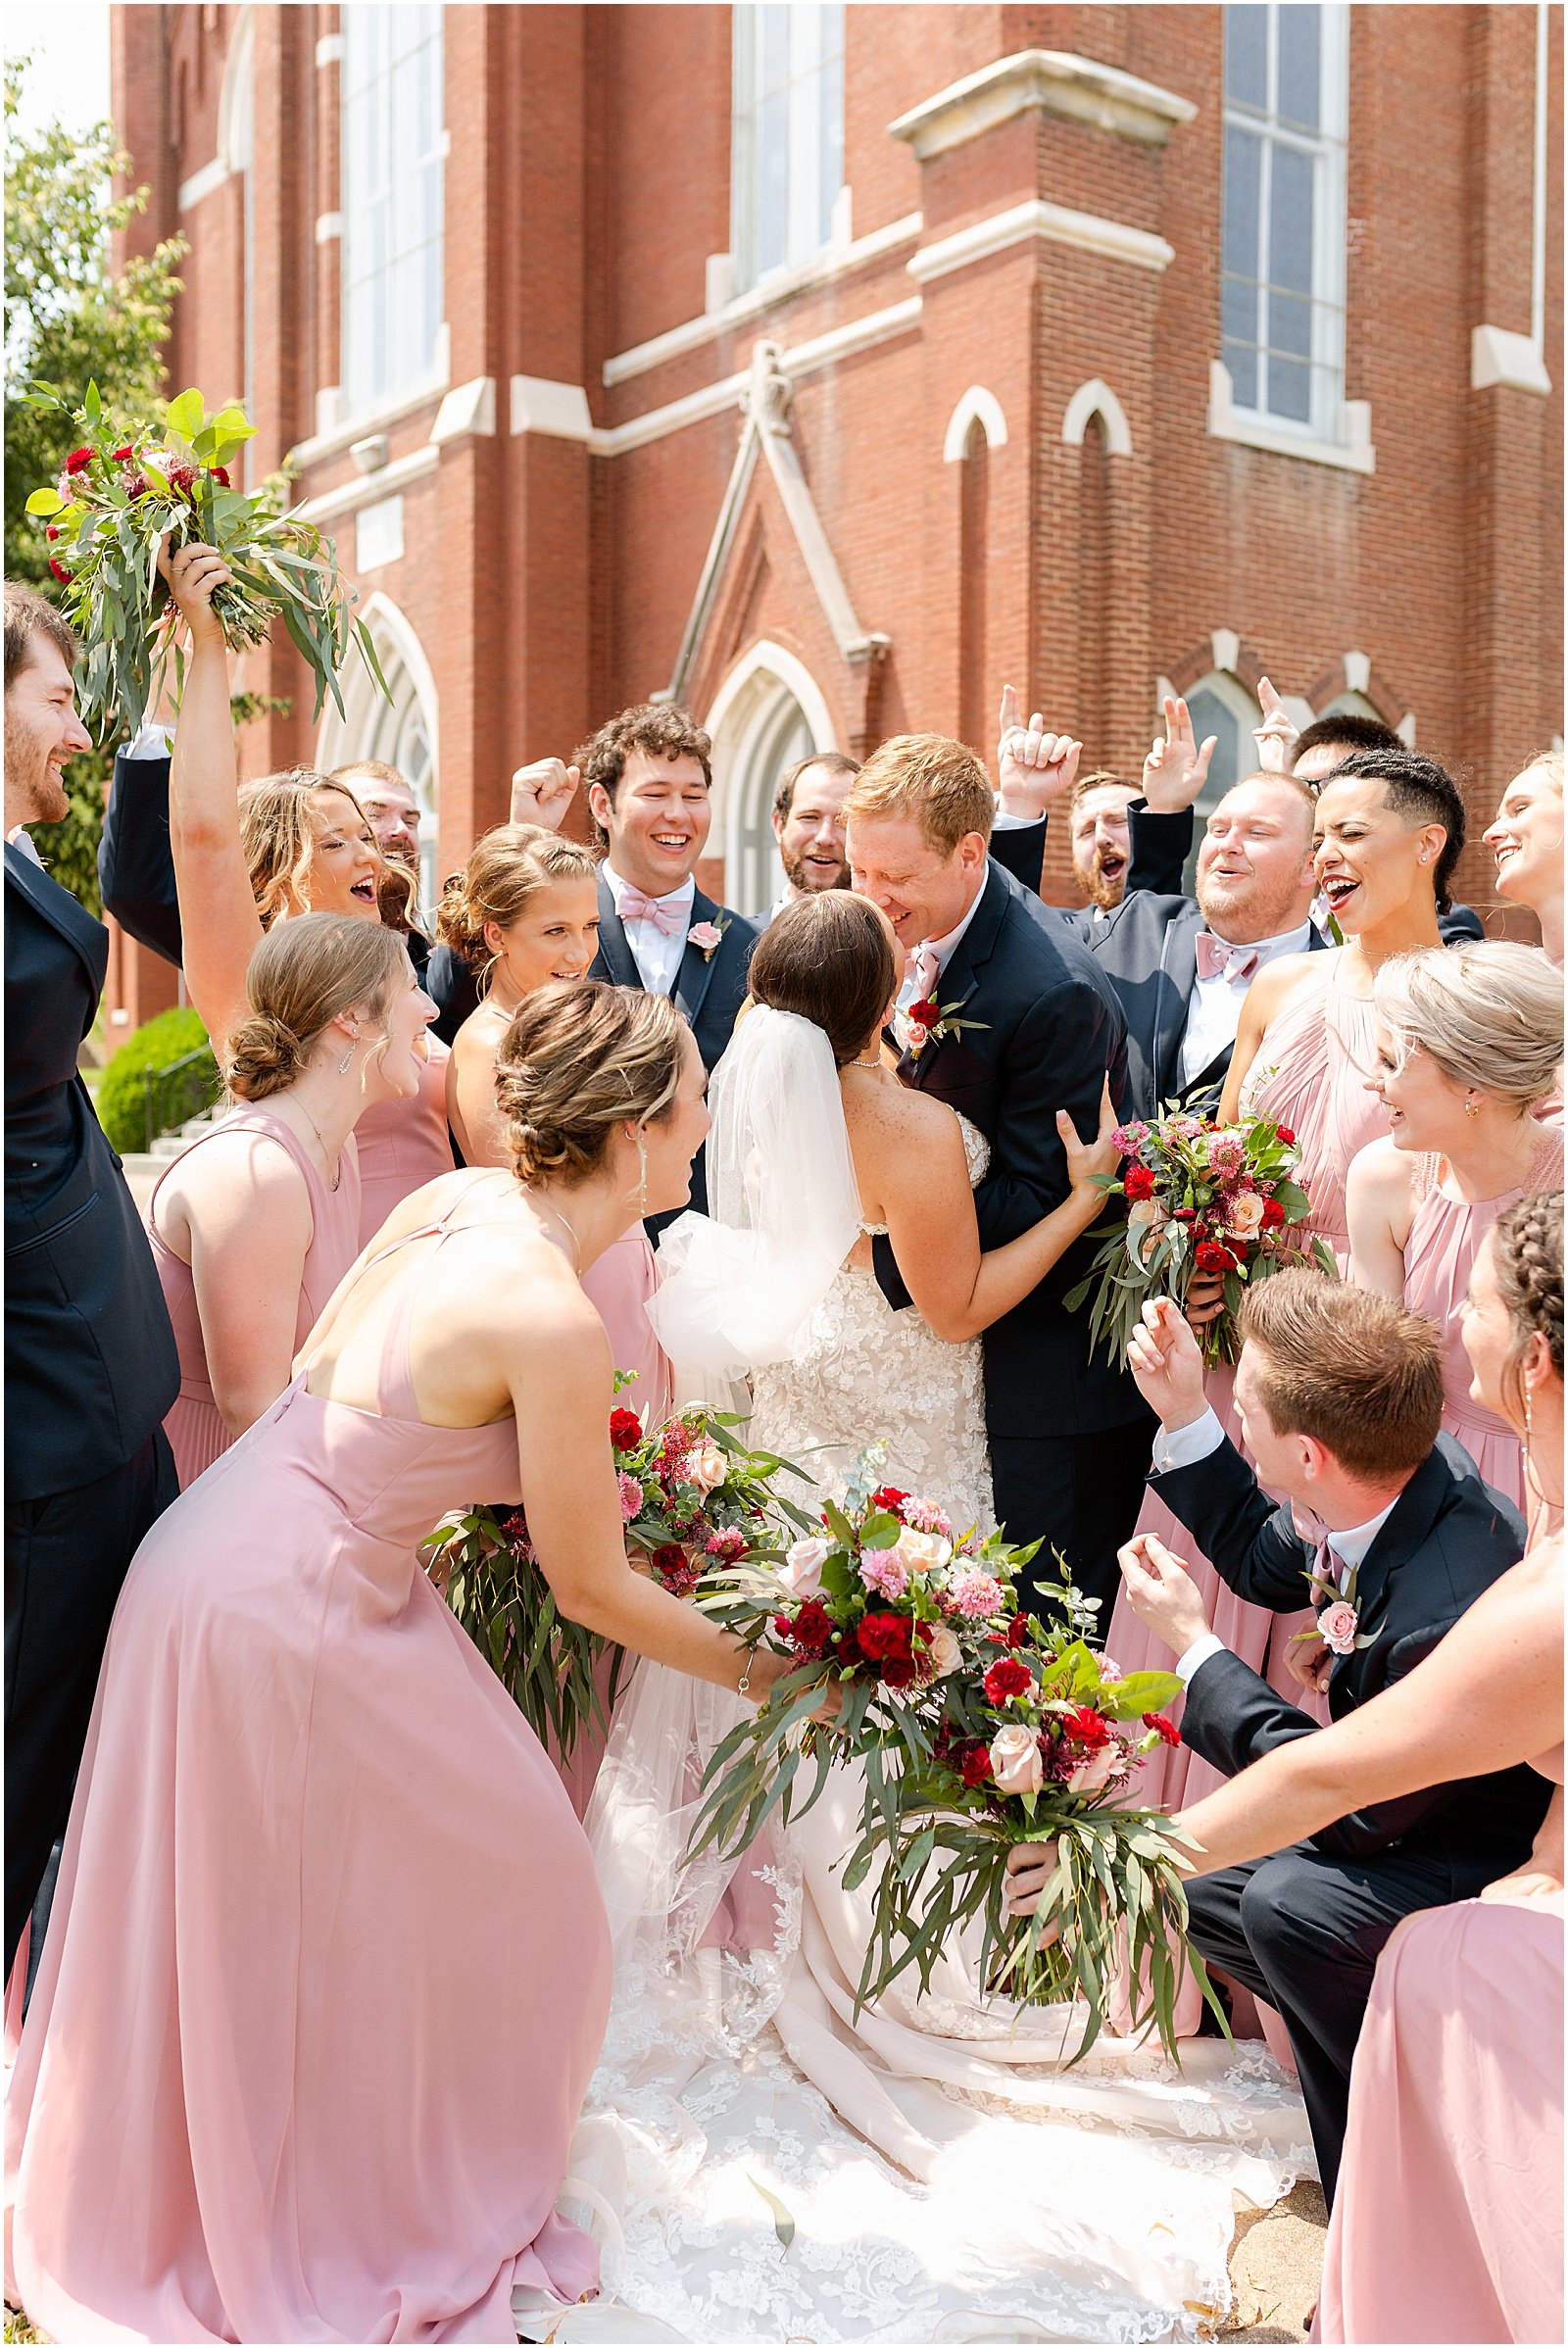 Deidra and Andrew | A Huntingburgh Indiana Wedding Bret and Brandie | Evansville Photographers | @bretandbrandie-0082.jpg